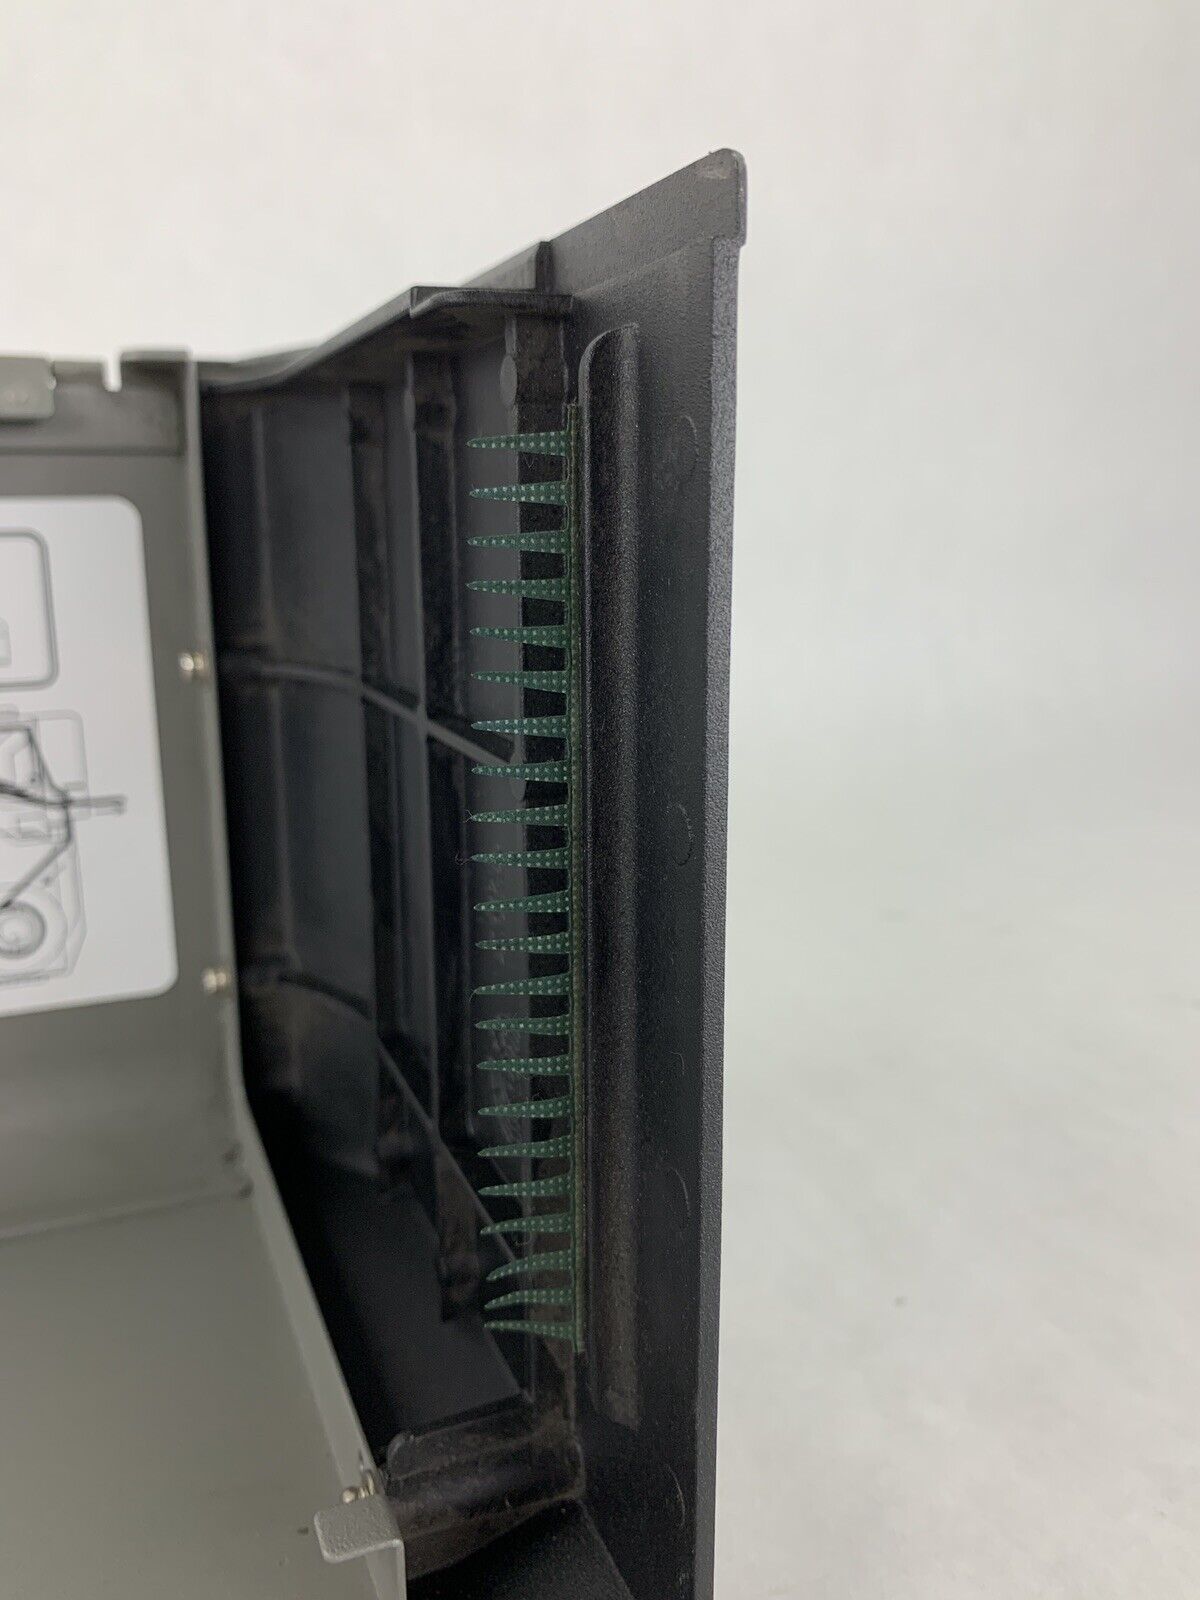 SATO CL4nx Barcode Printer Door Cover W/ Screws